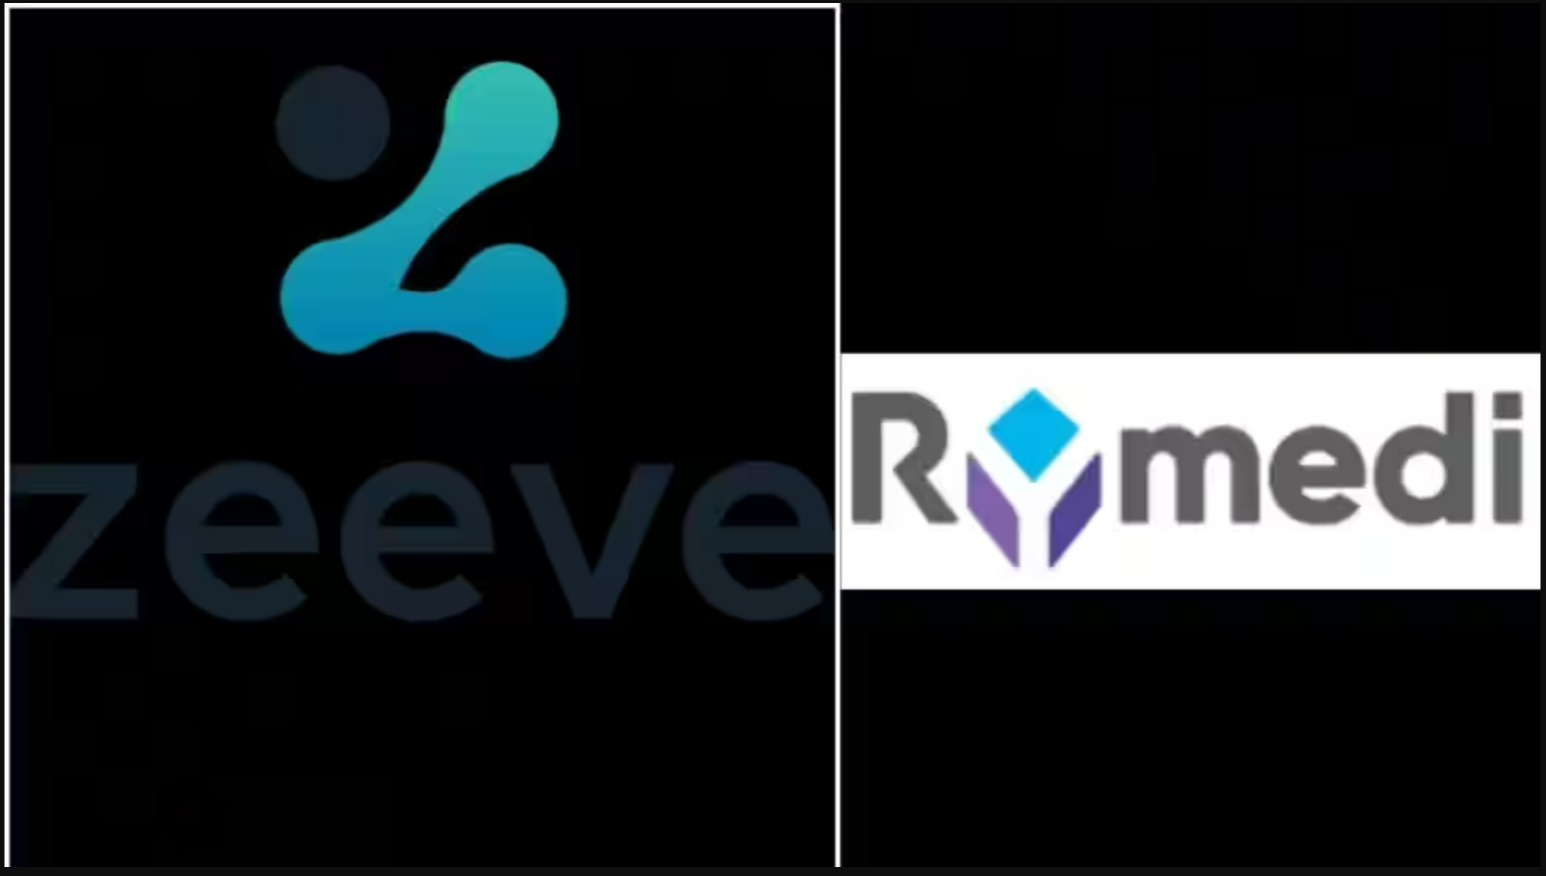 RYMEDI enters into a partnership with Zeeve